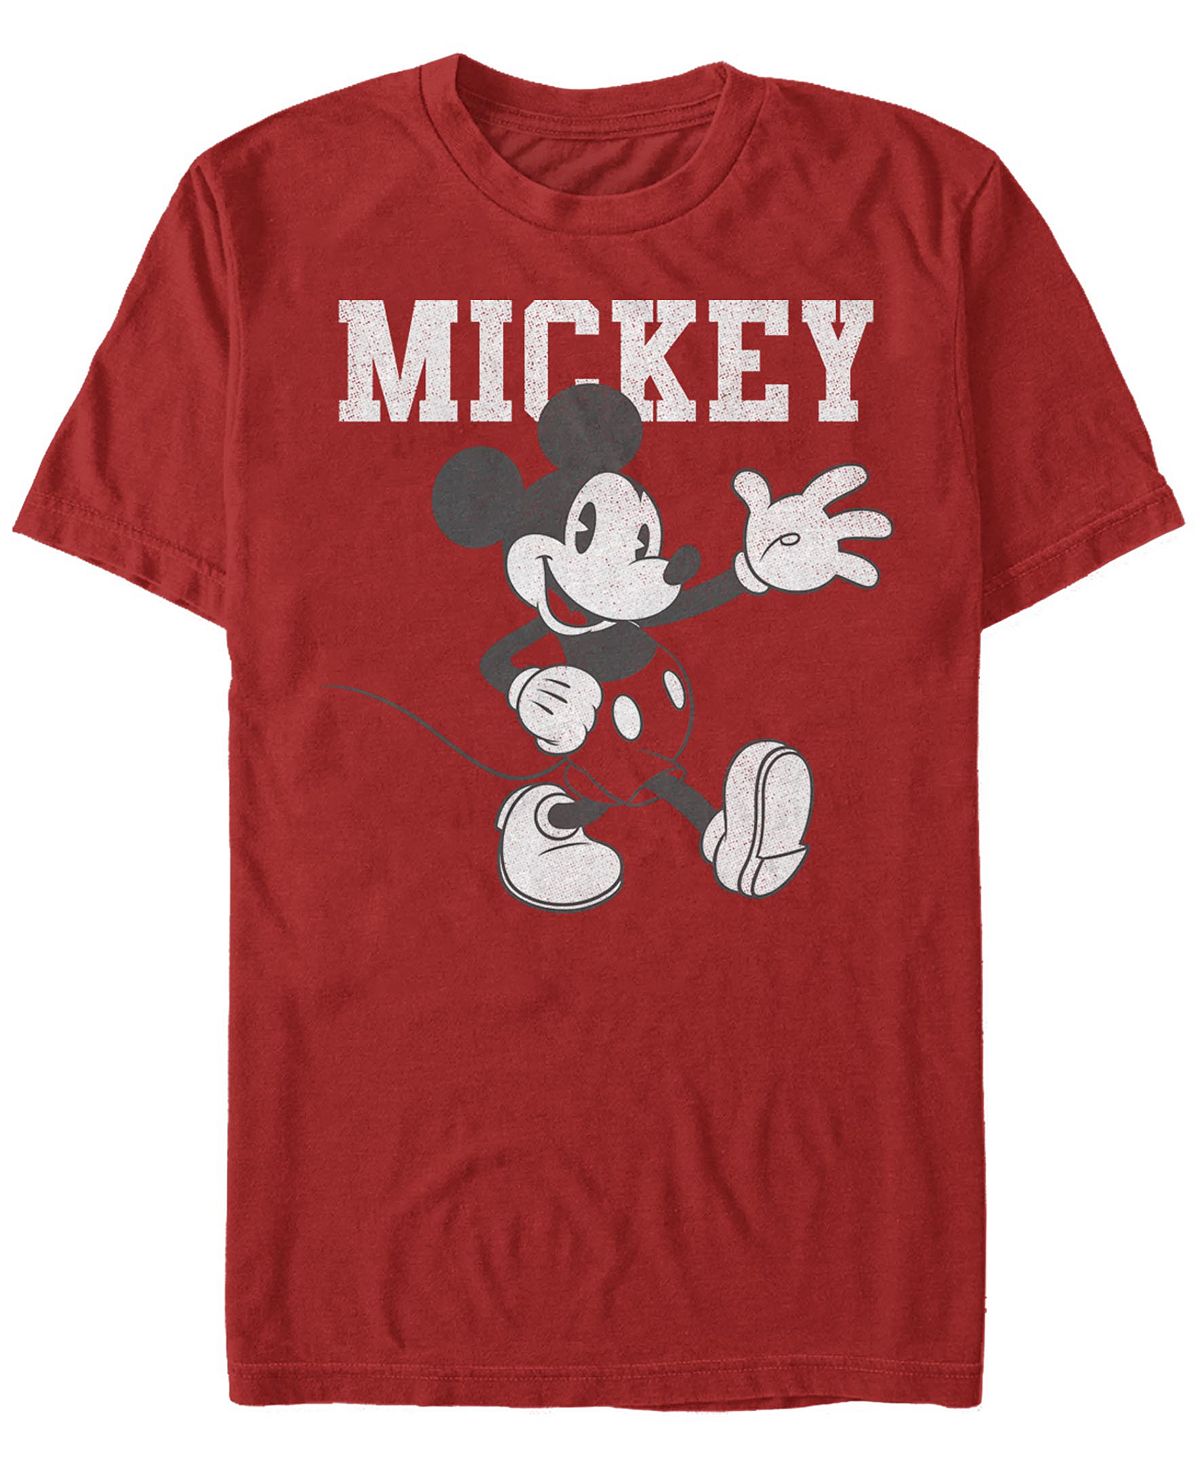 Мужская футболка с круглым вырезом с короткими рукавами simply mickey Fifth Sun, красный мужская классическая футболка с короткими рукавами mickey hello darling fifth sun черный